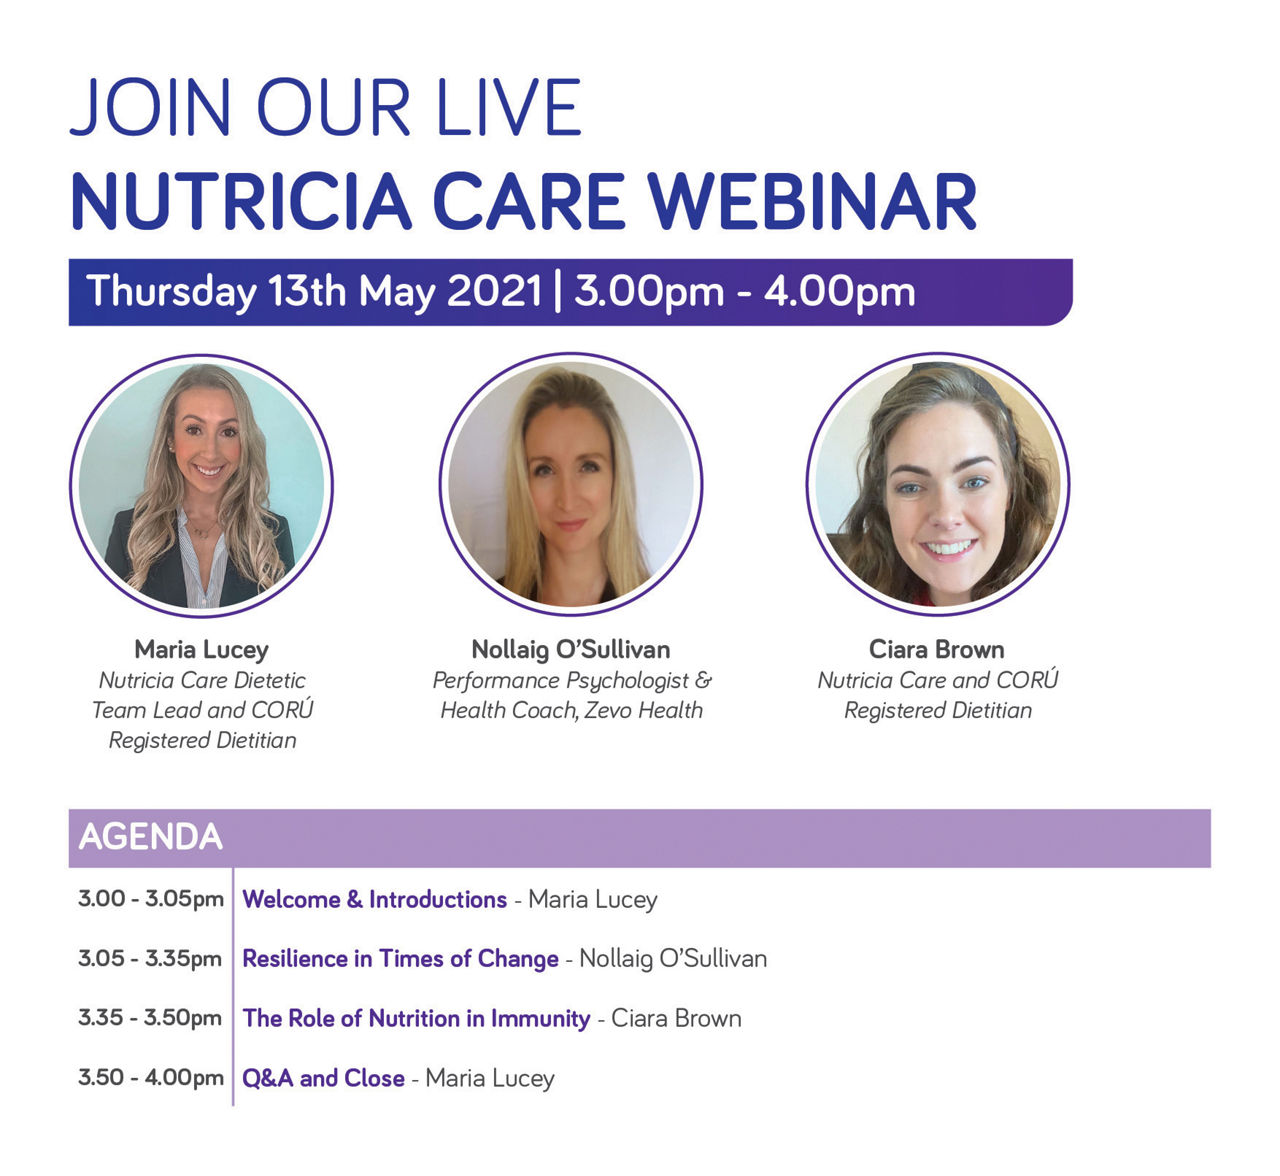 Nutricia Care webinar speakers and agenda